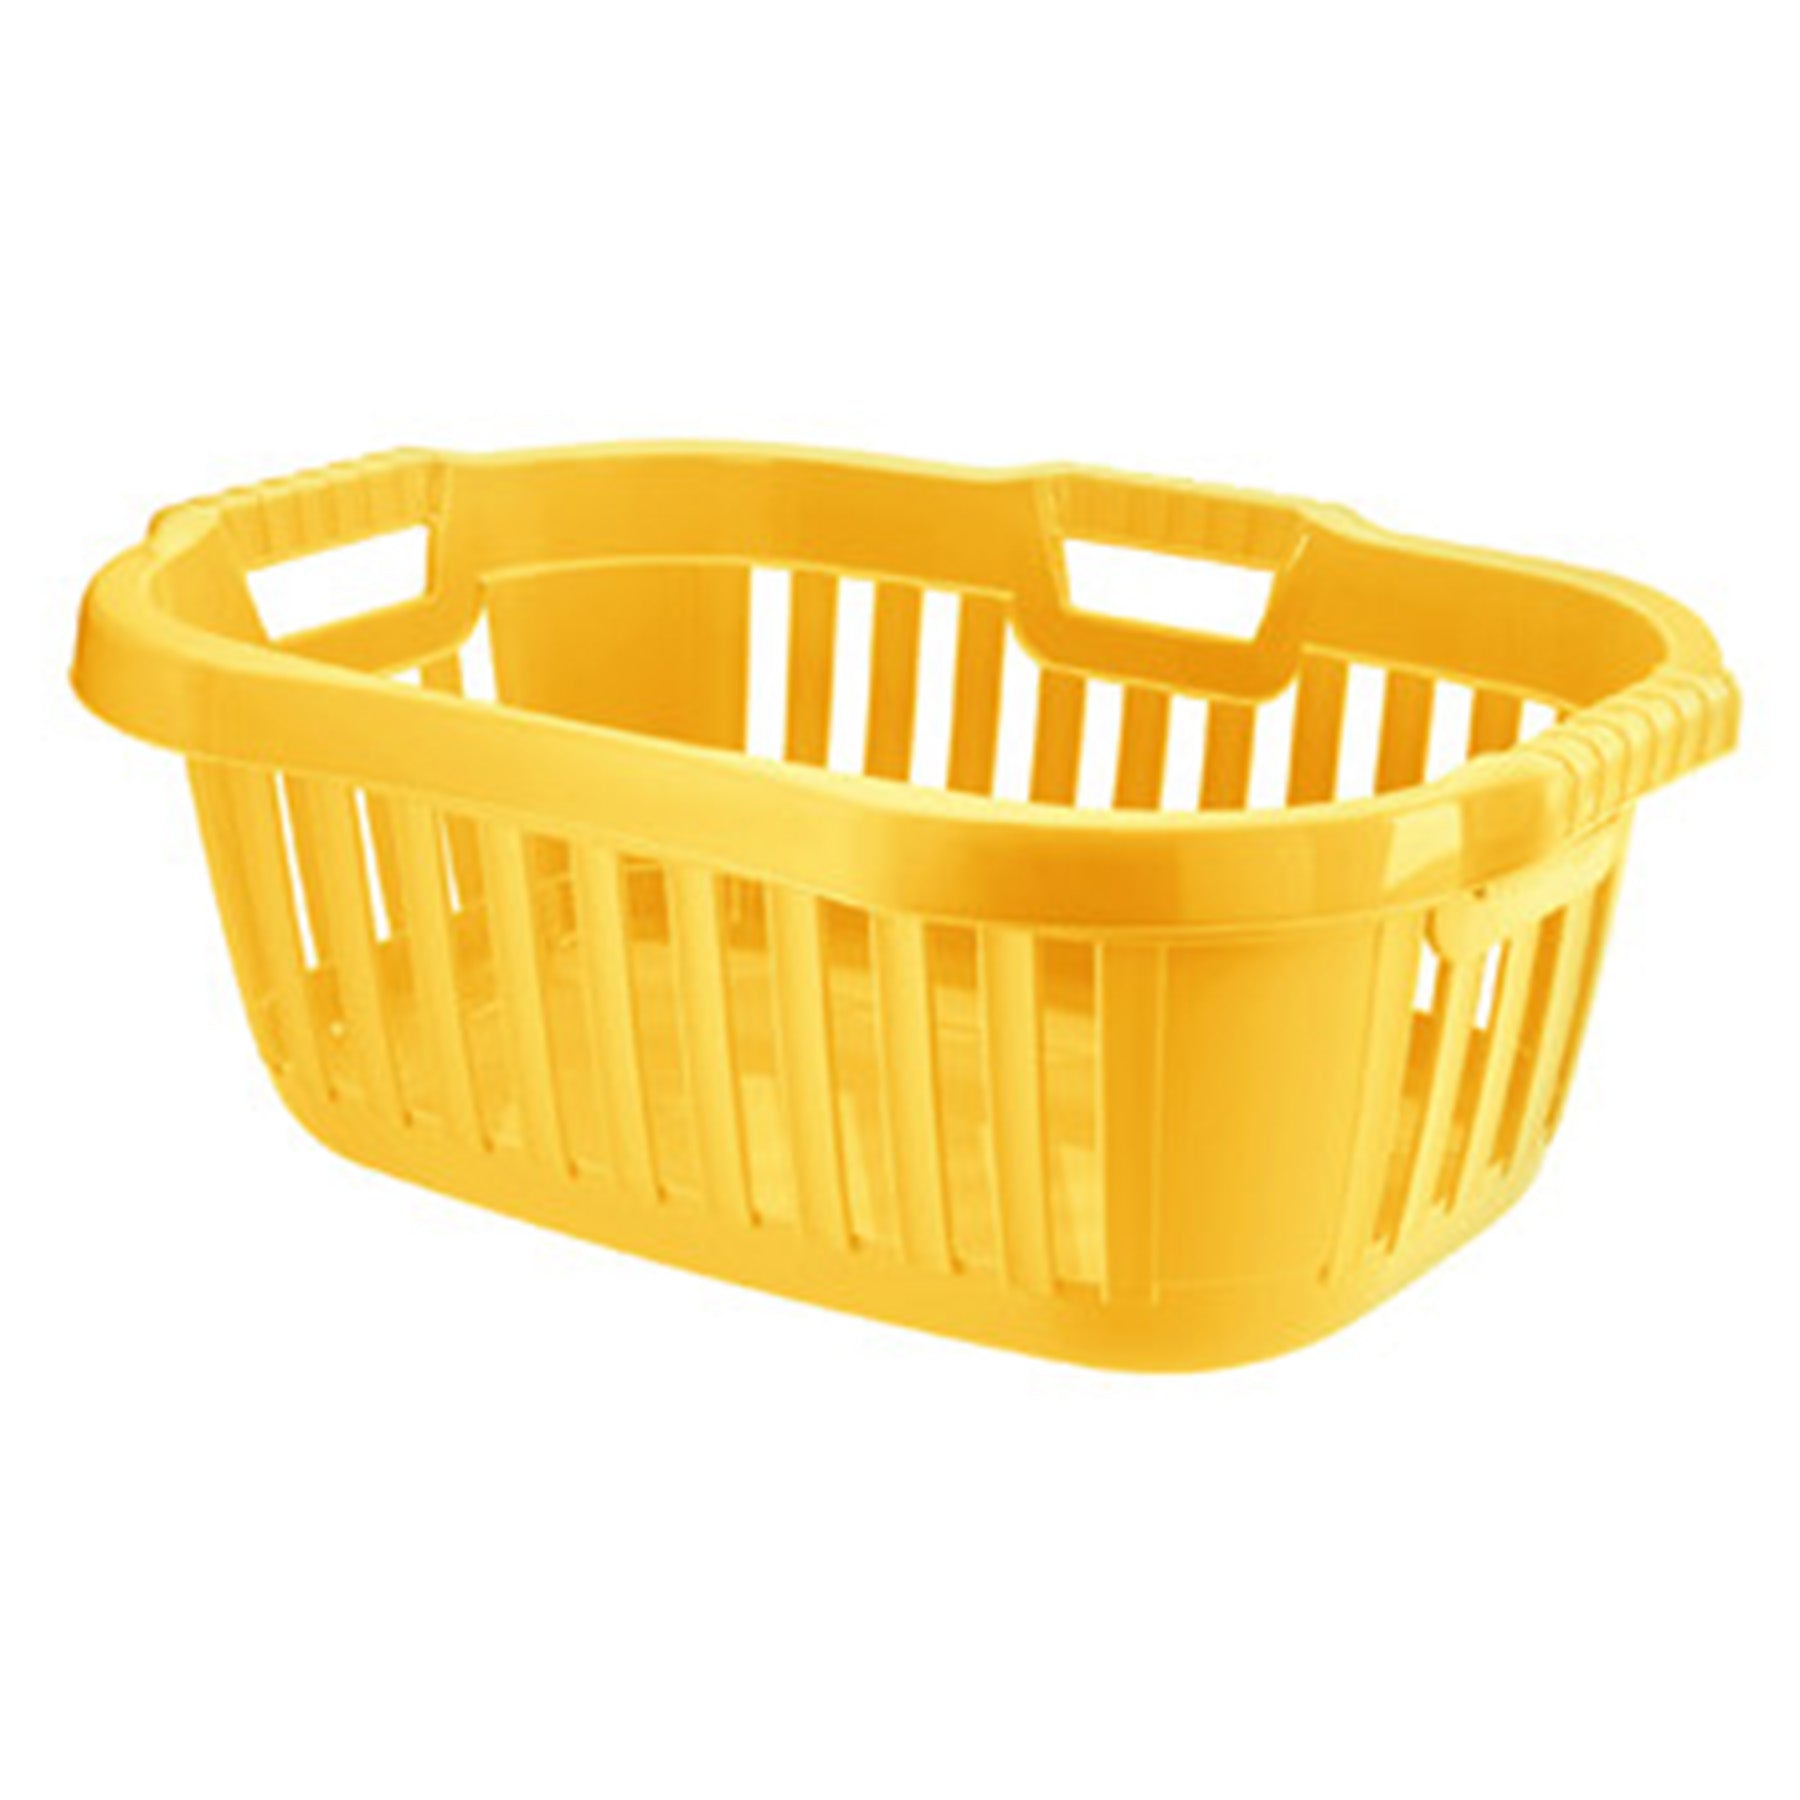 Laundry basket Capacity: 32 Liters